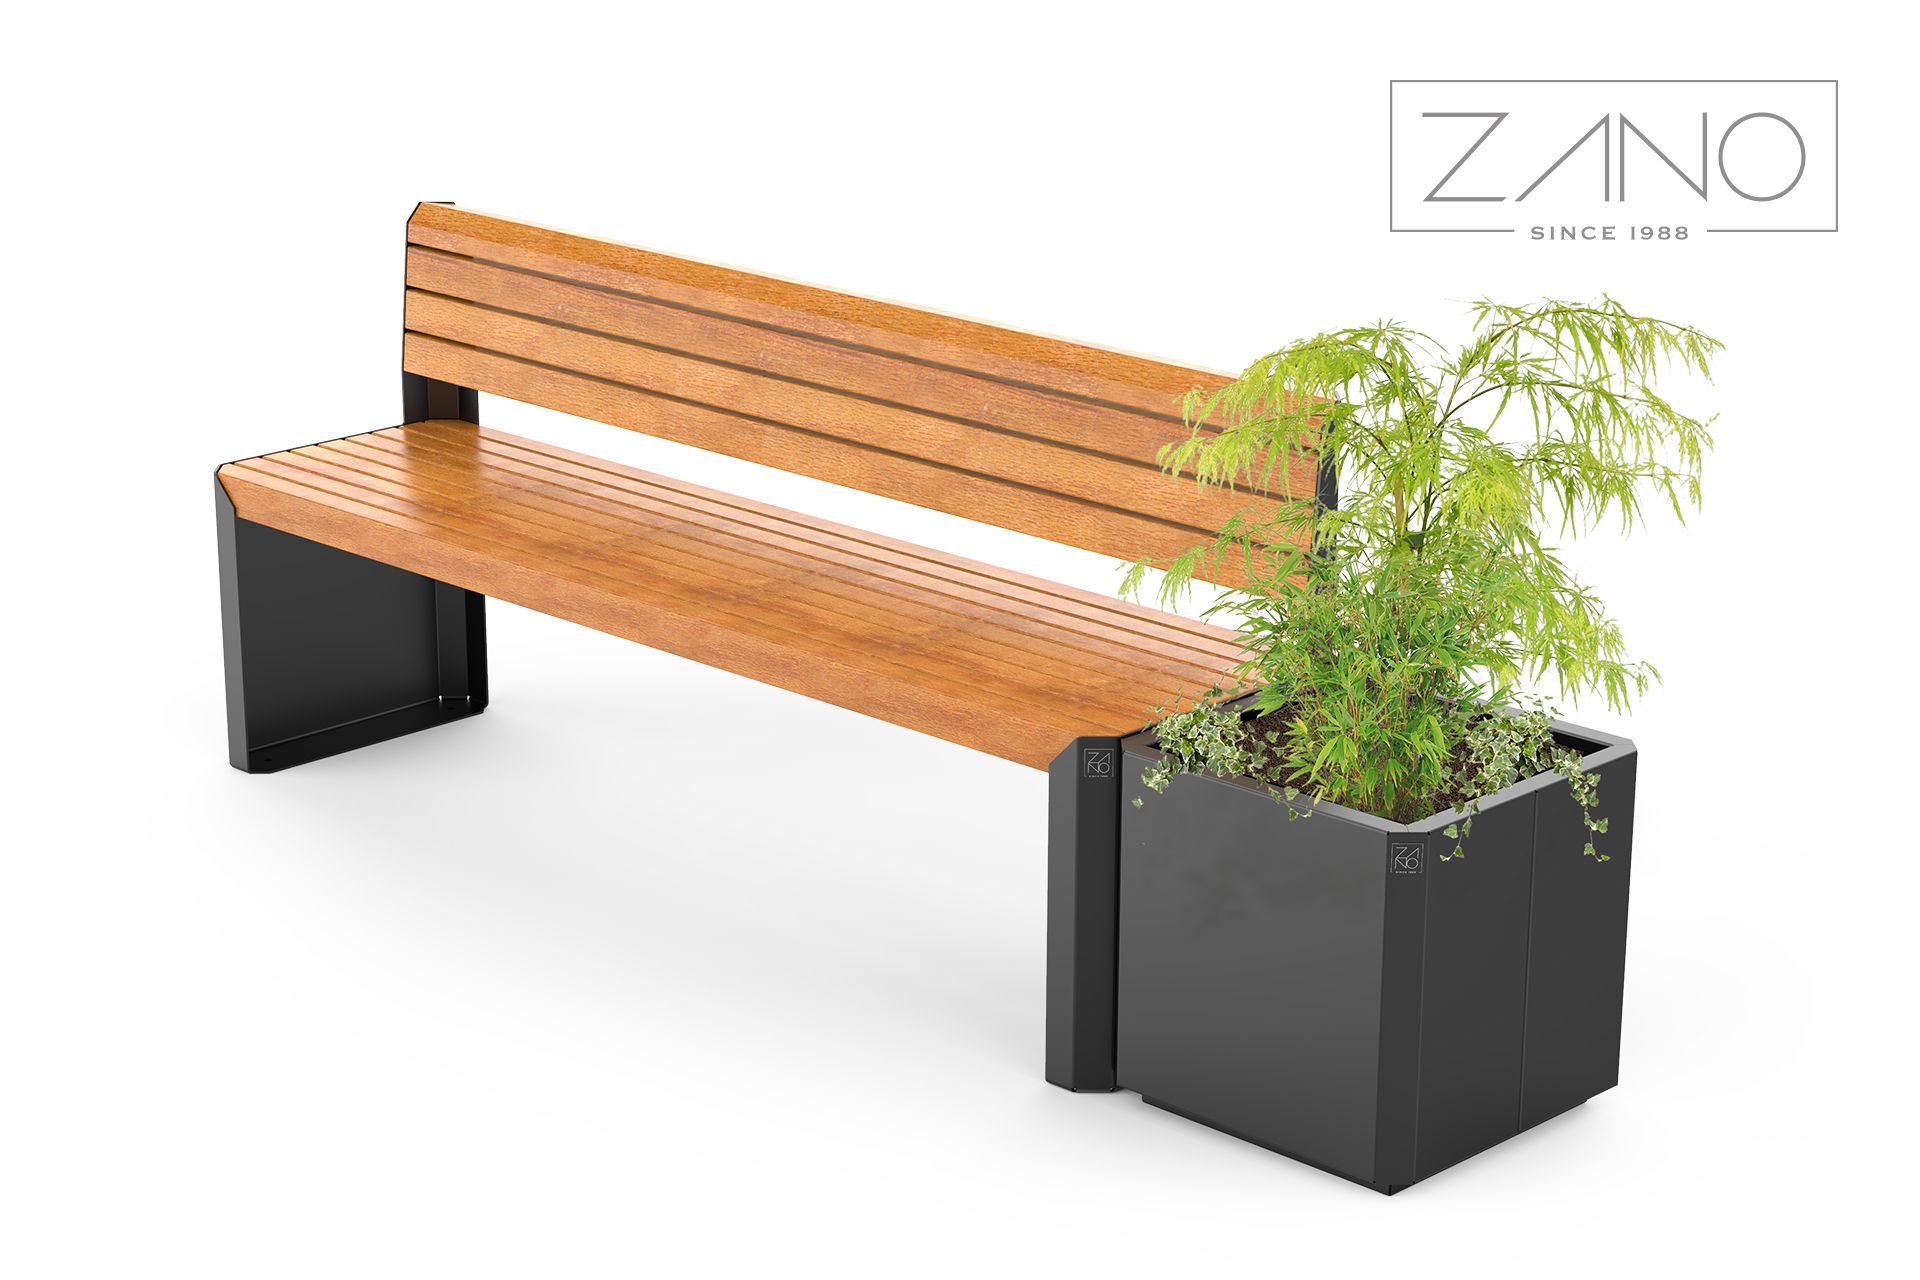 Stilo urban bench with pot